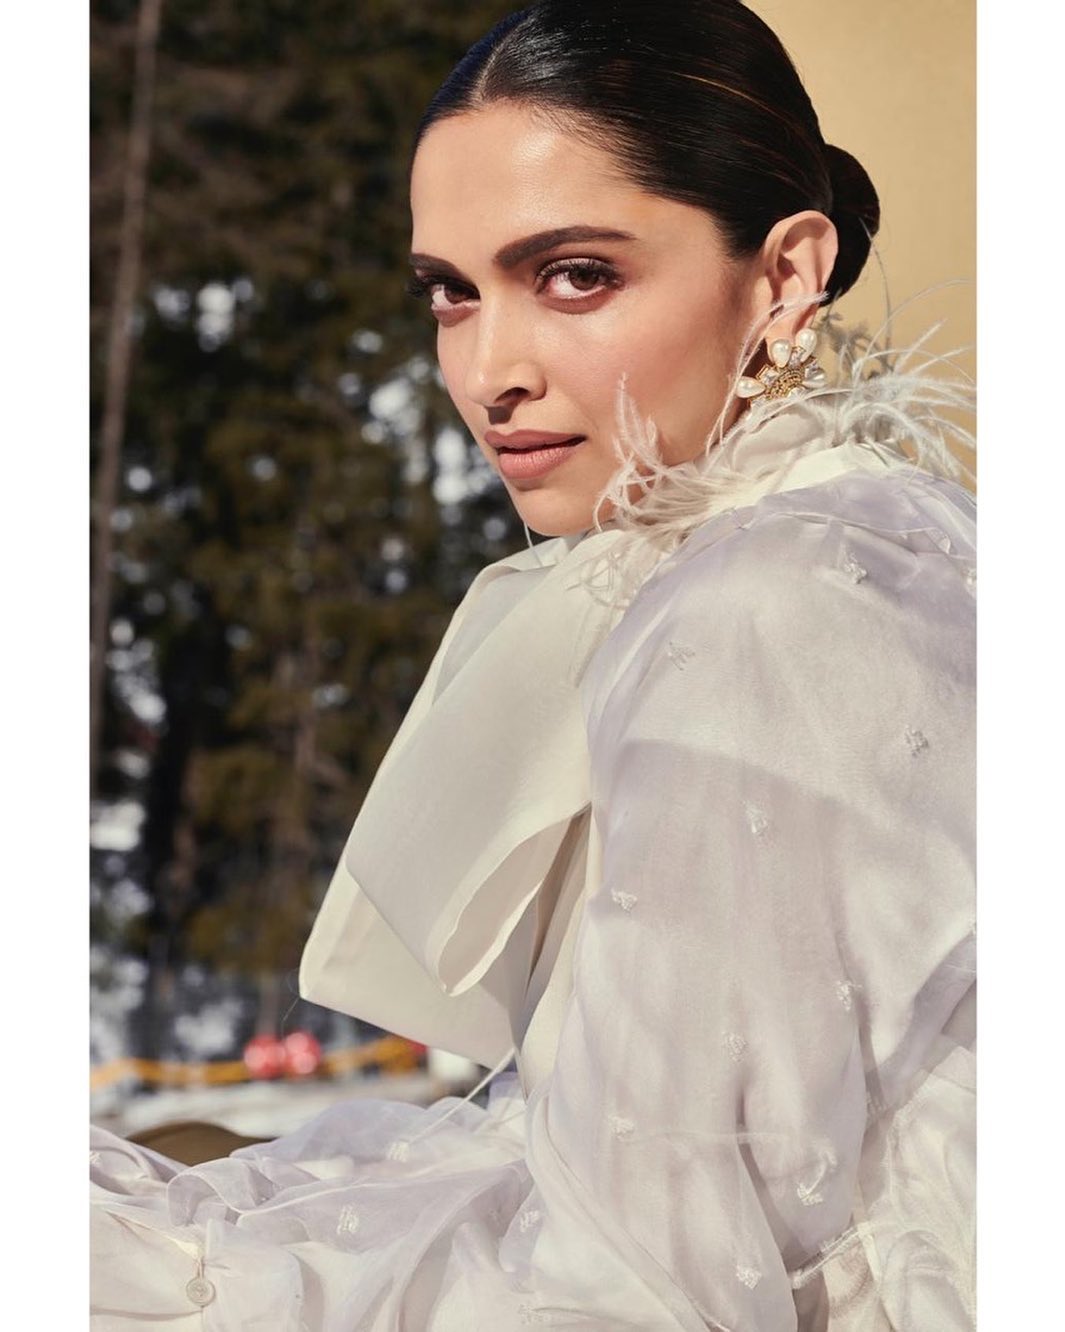 Deepika Padukone is first Indian star in a Louis Vuitton global